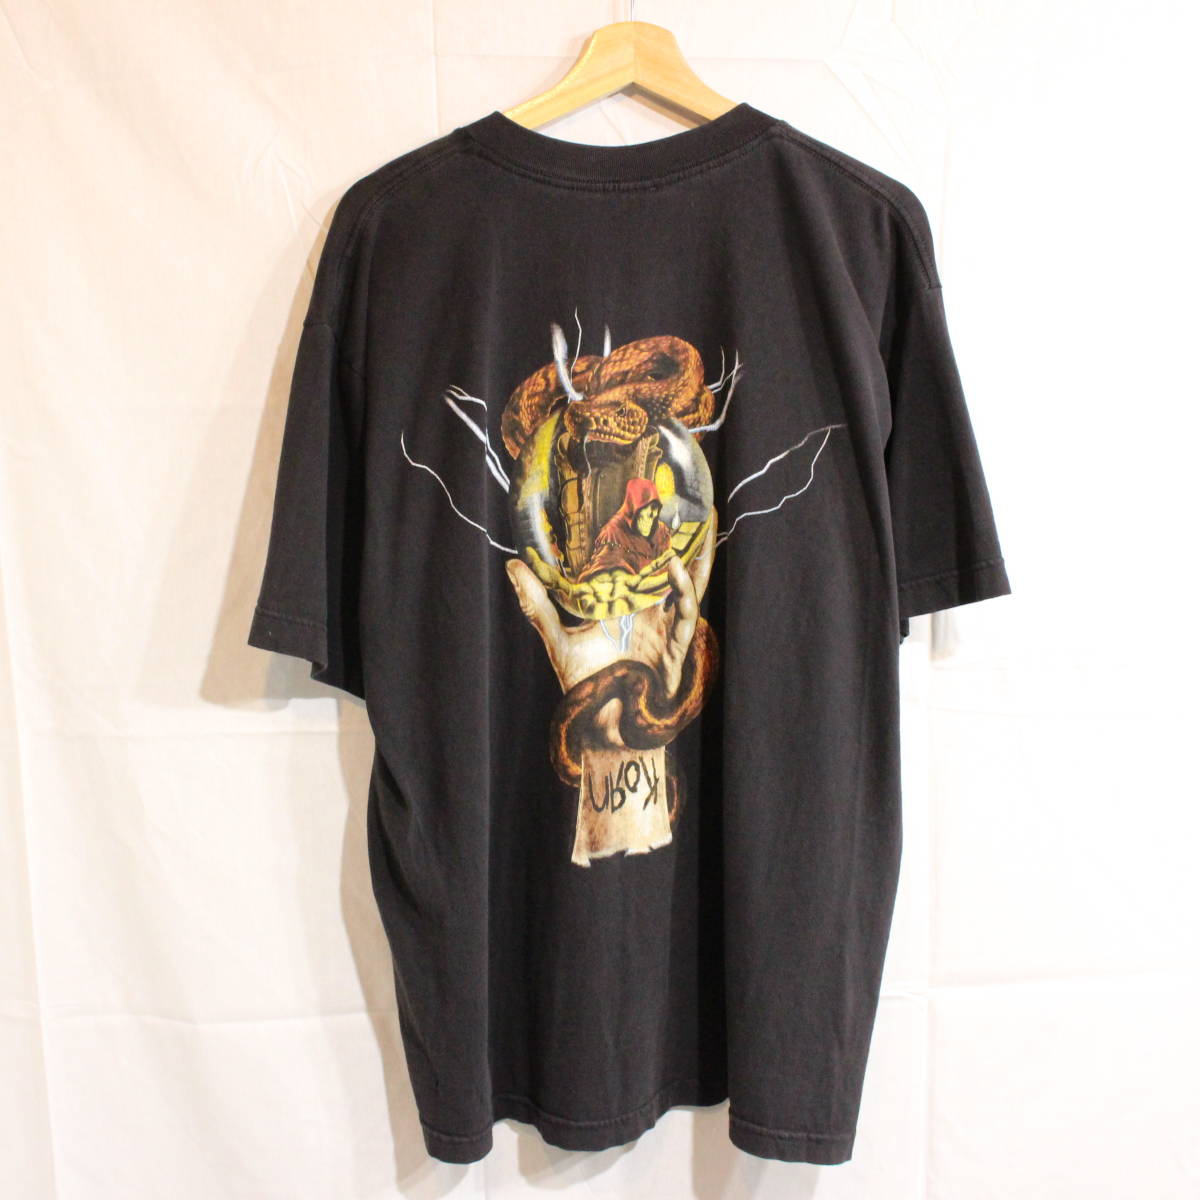 L266 90s Vintage KORN corn lock T-shirt #1990 period made inscription XL size black black band T hard core Skull Street 80s 70s 60s